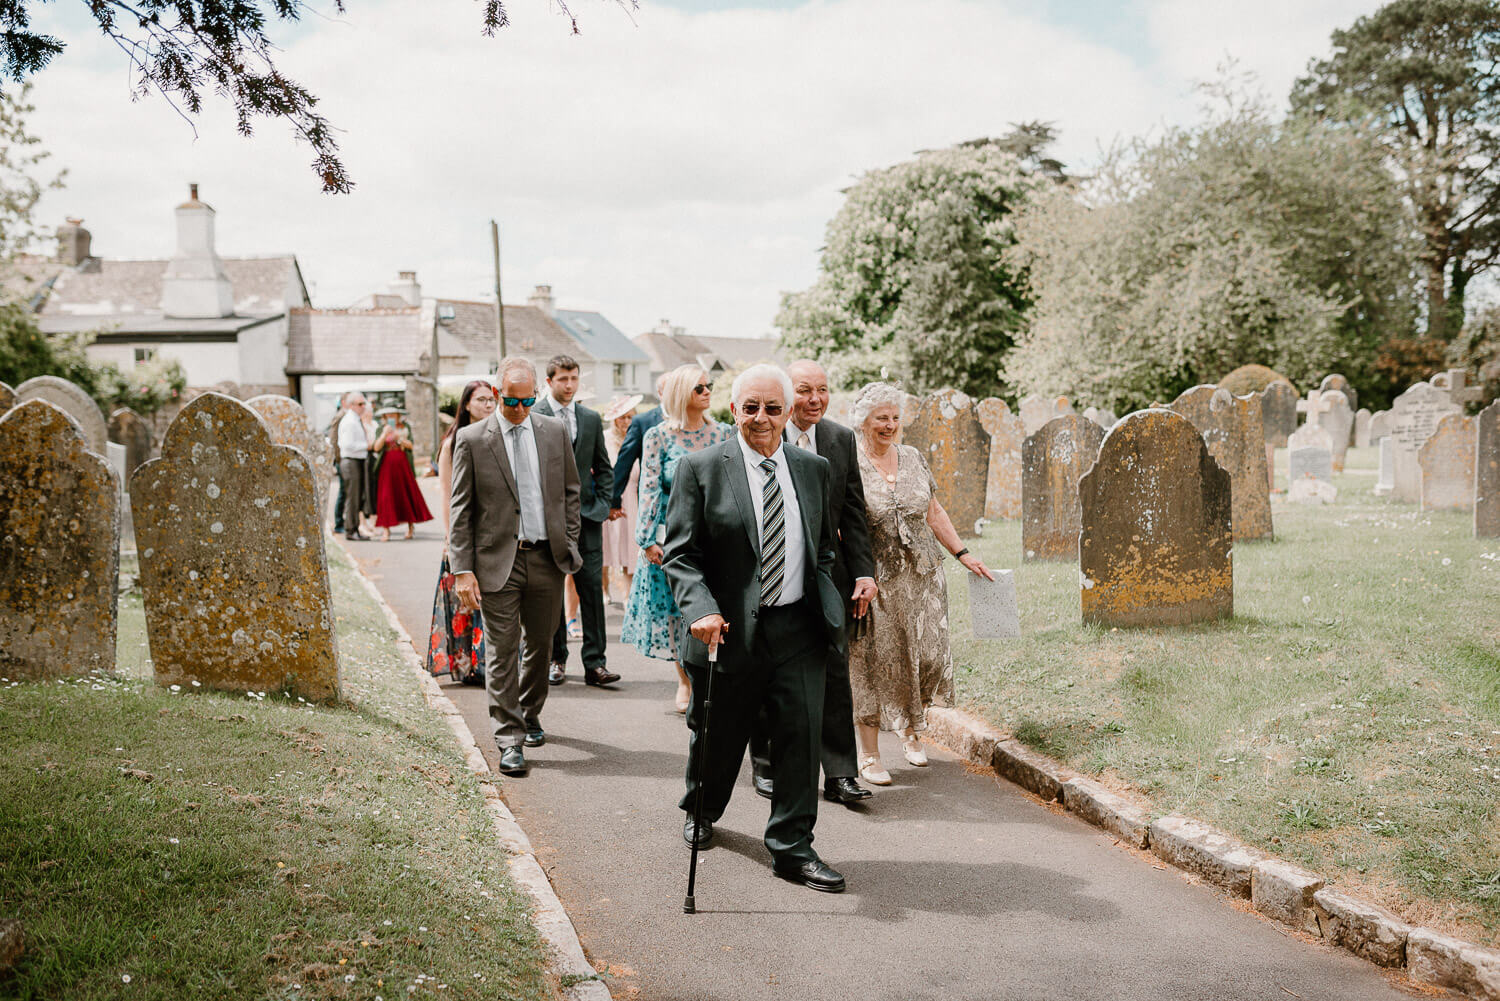 Wedding guests walk towards the church in Ipplepen, Devon.